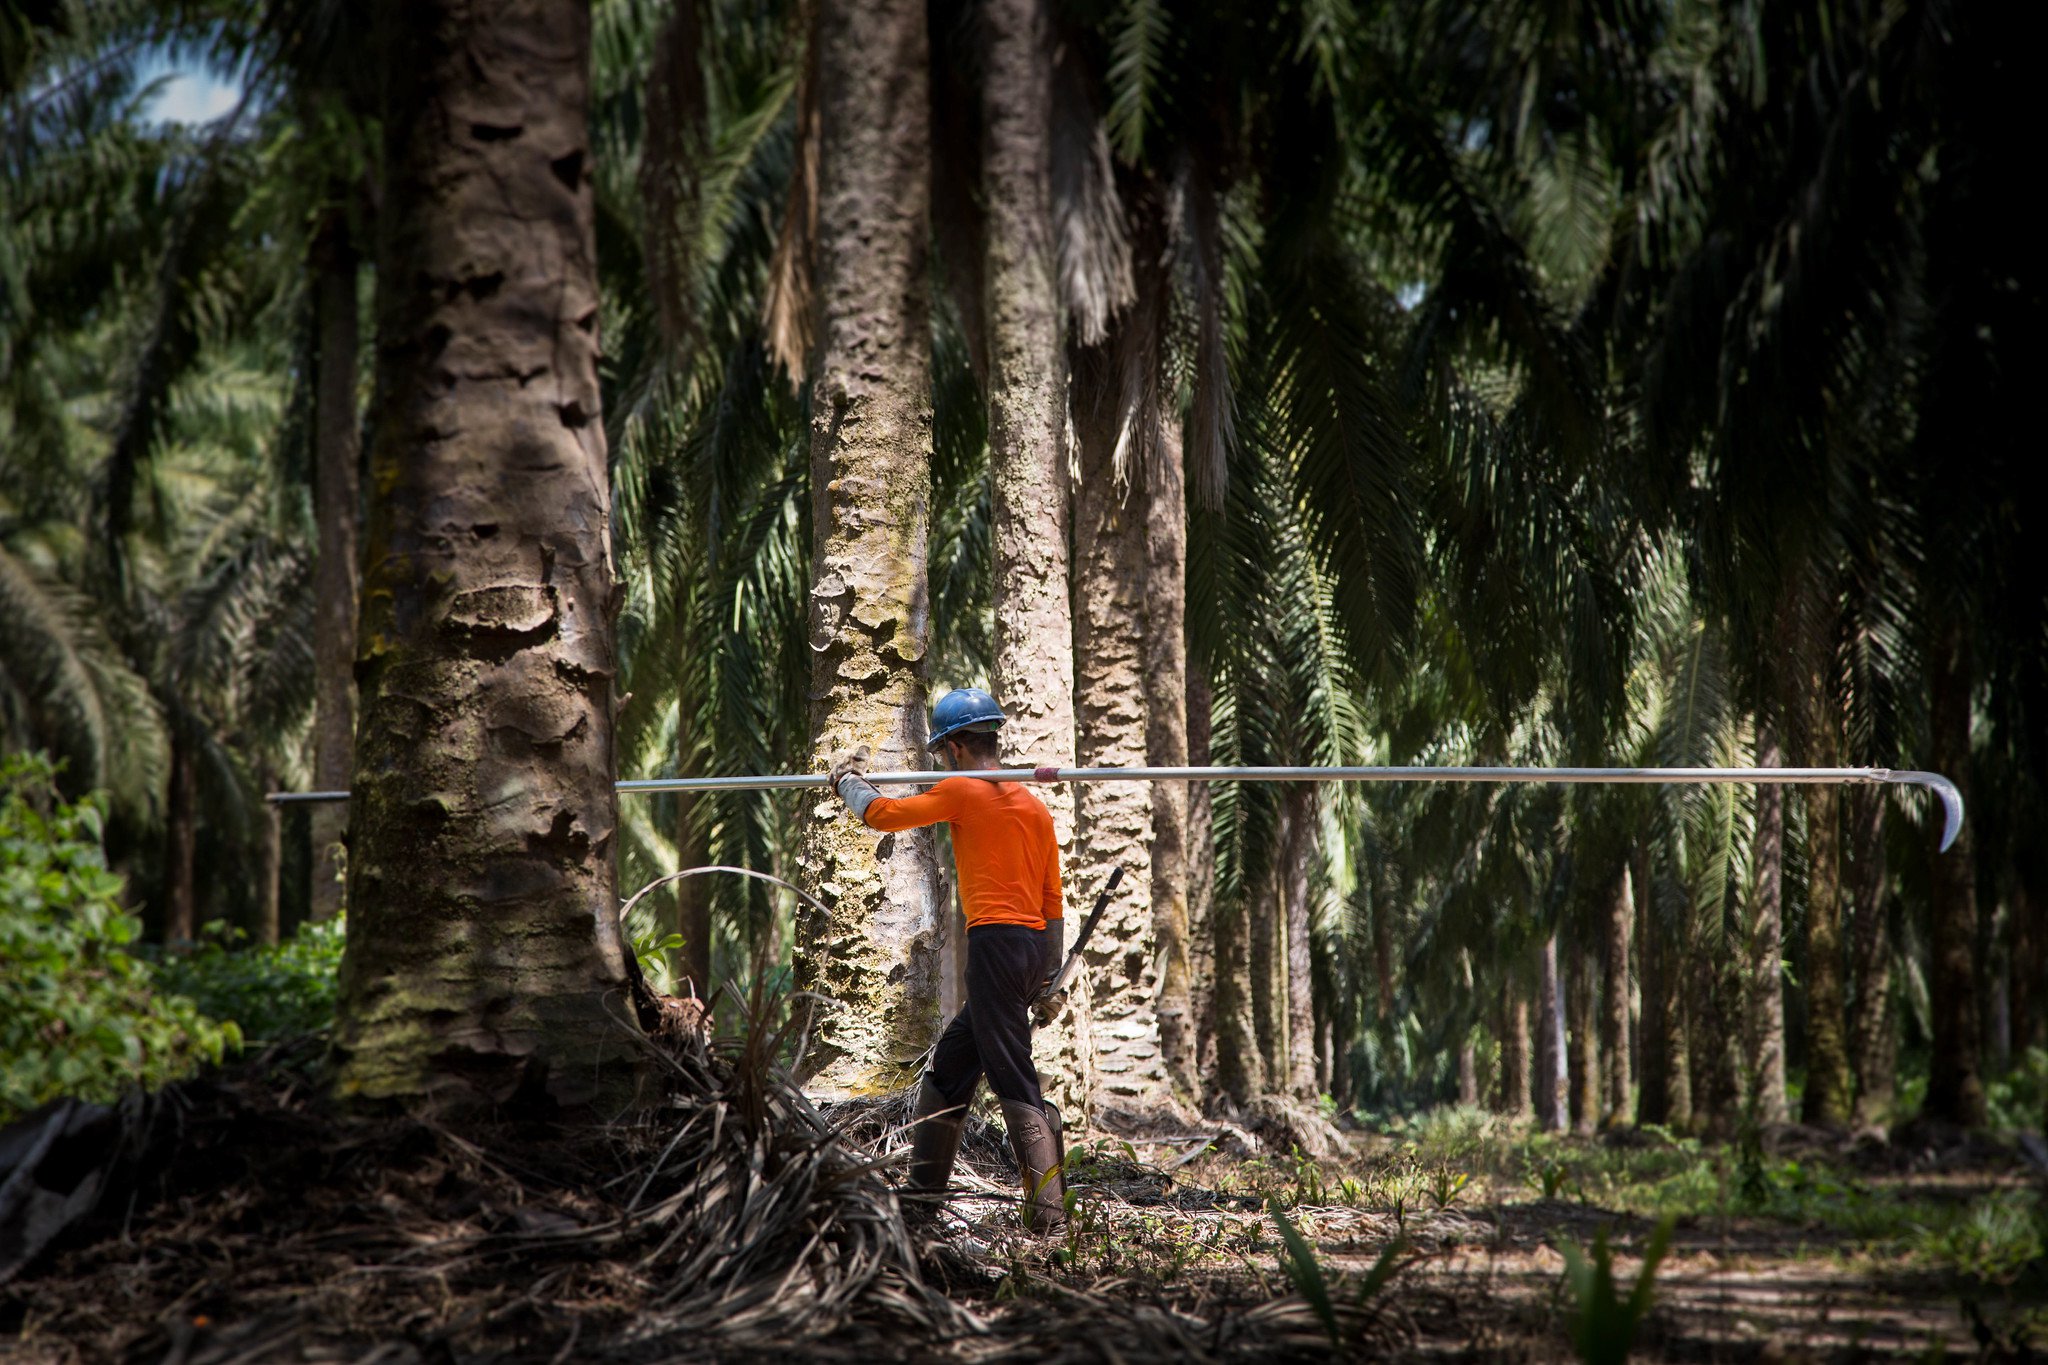 Palm oil factory worker, Brazil